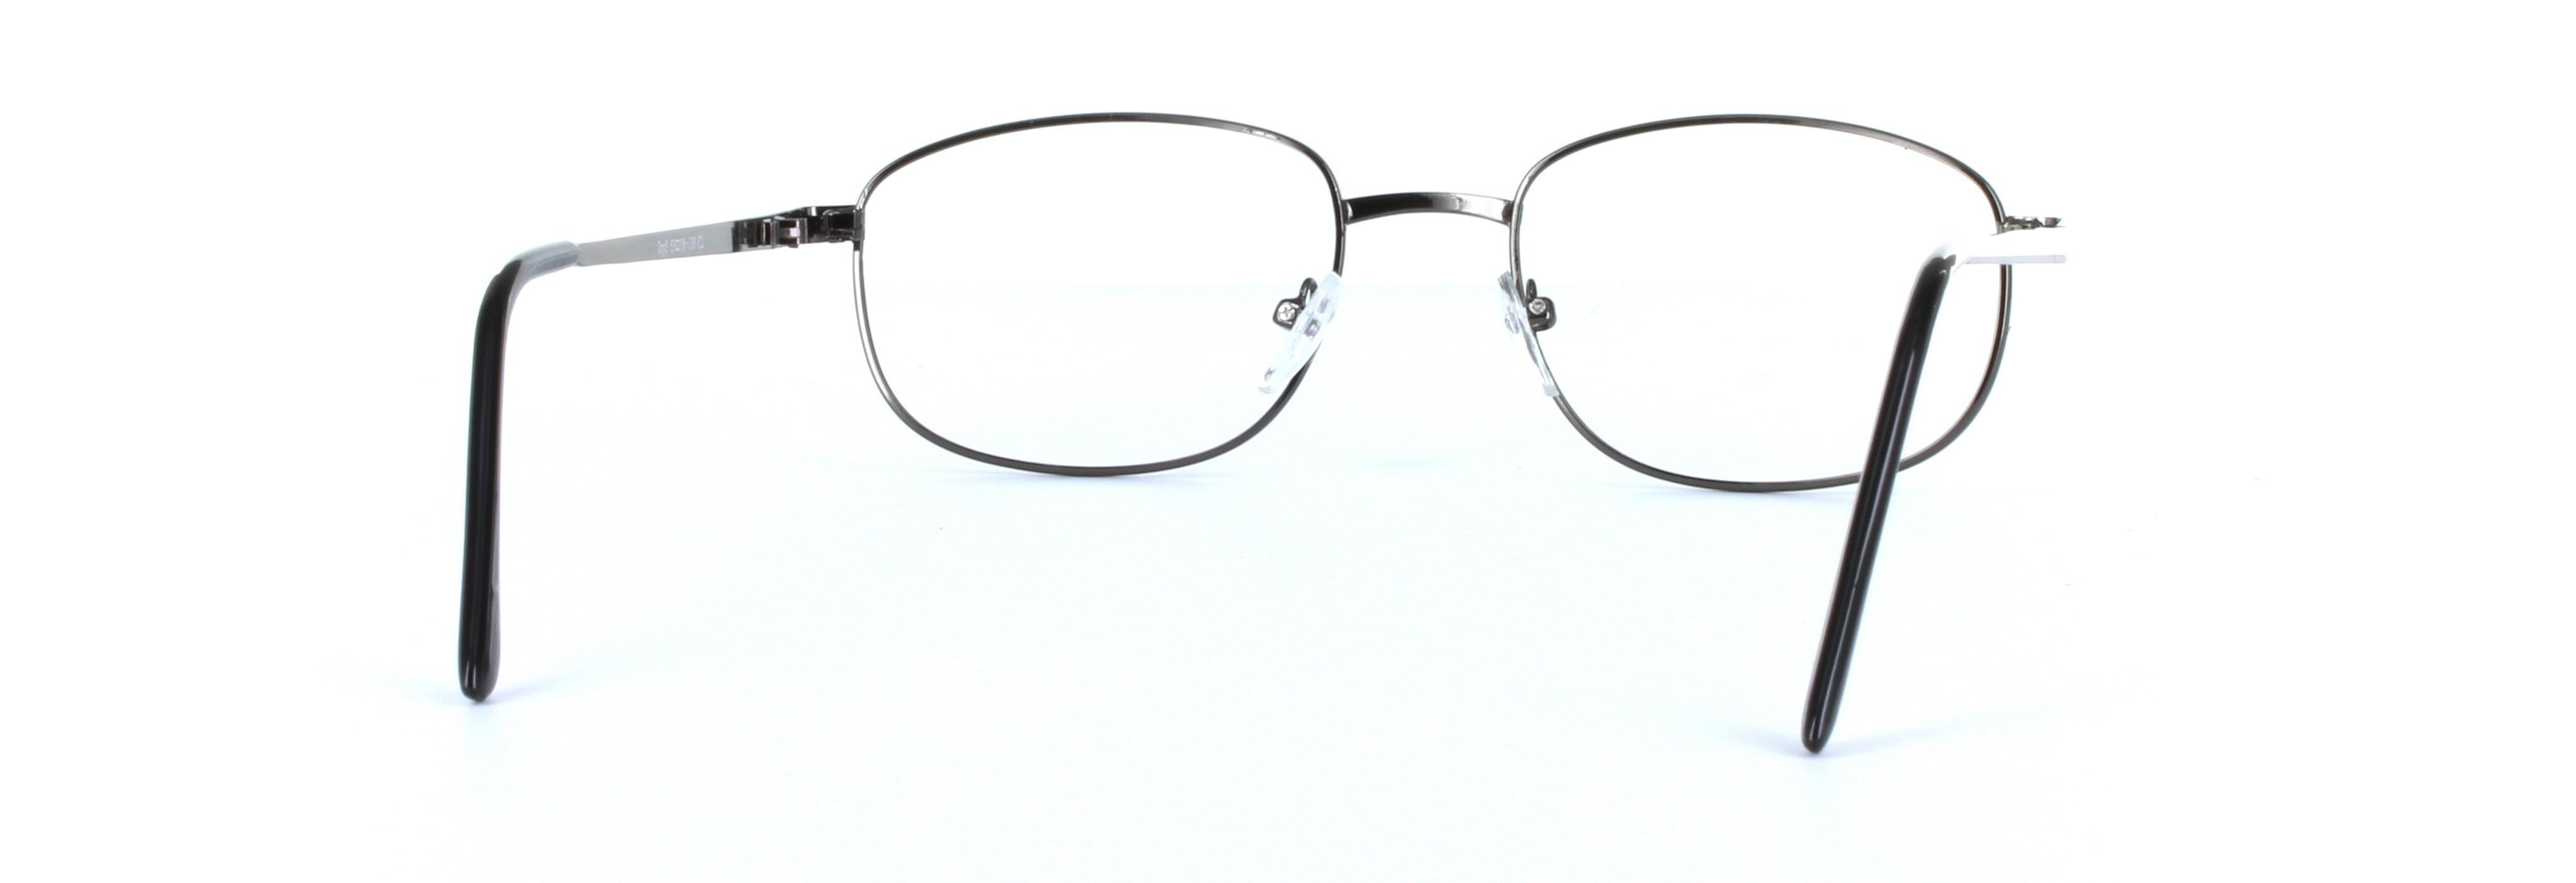 Ashton Gunmetal Full Rim Rectangular Metal Glasses - Image View 3